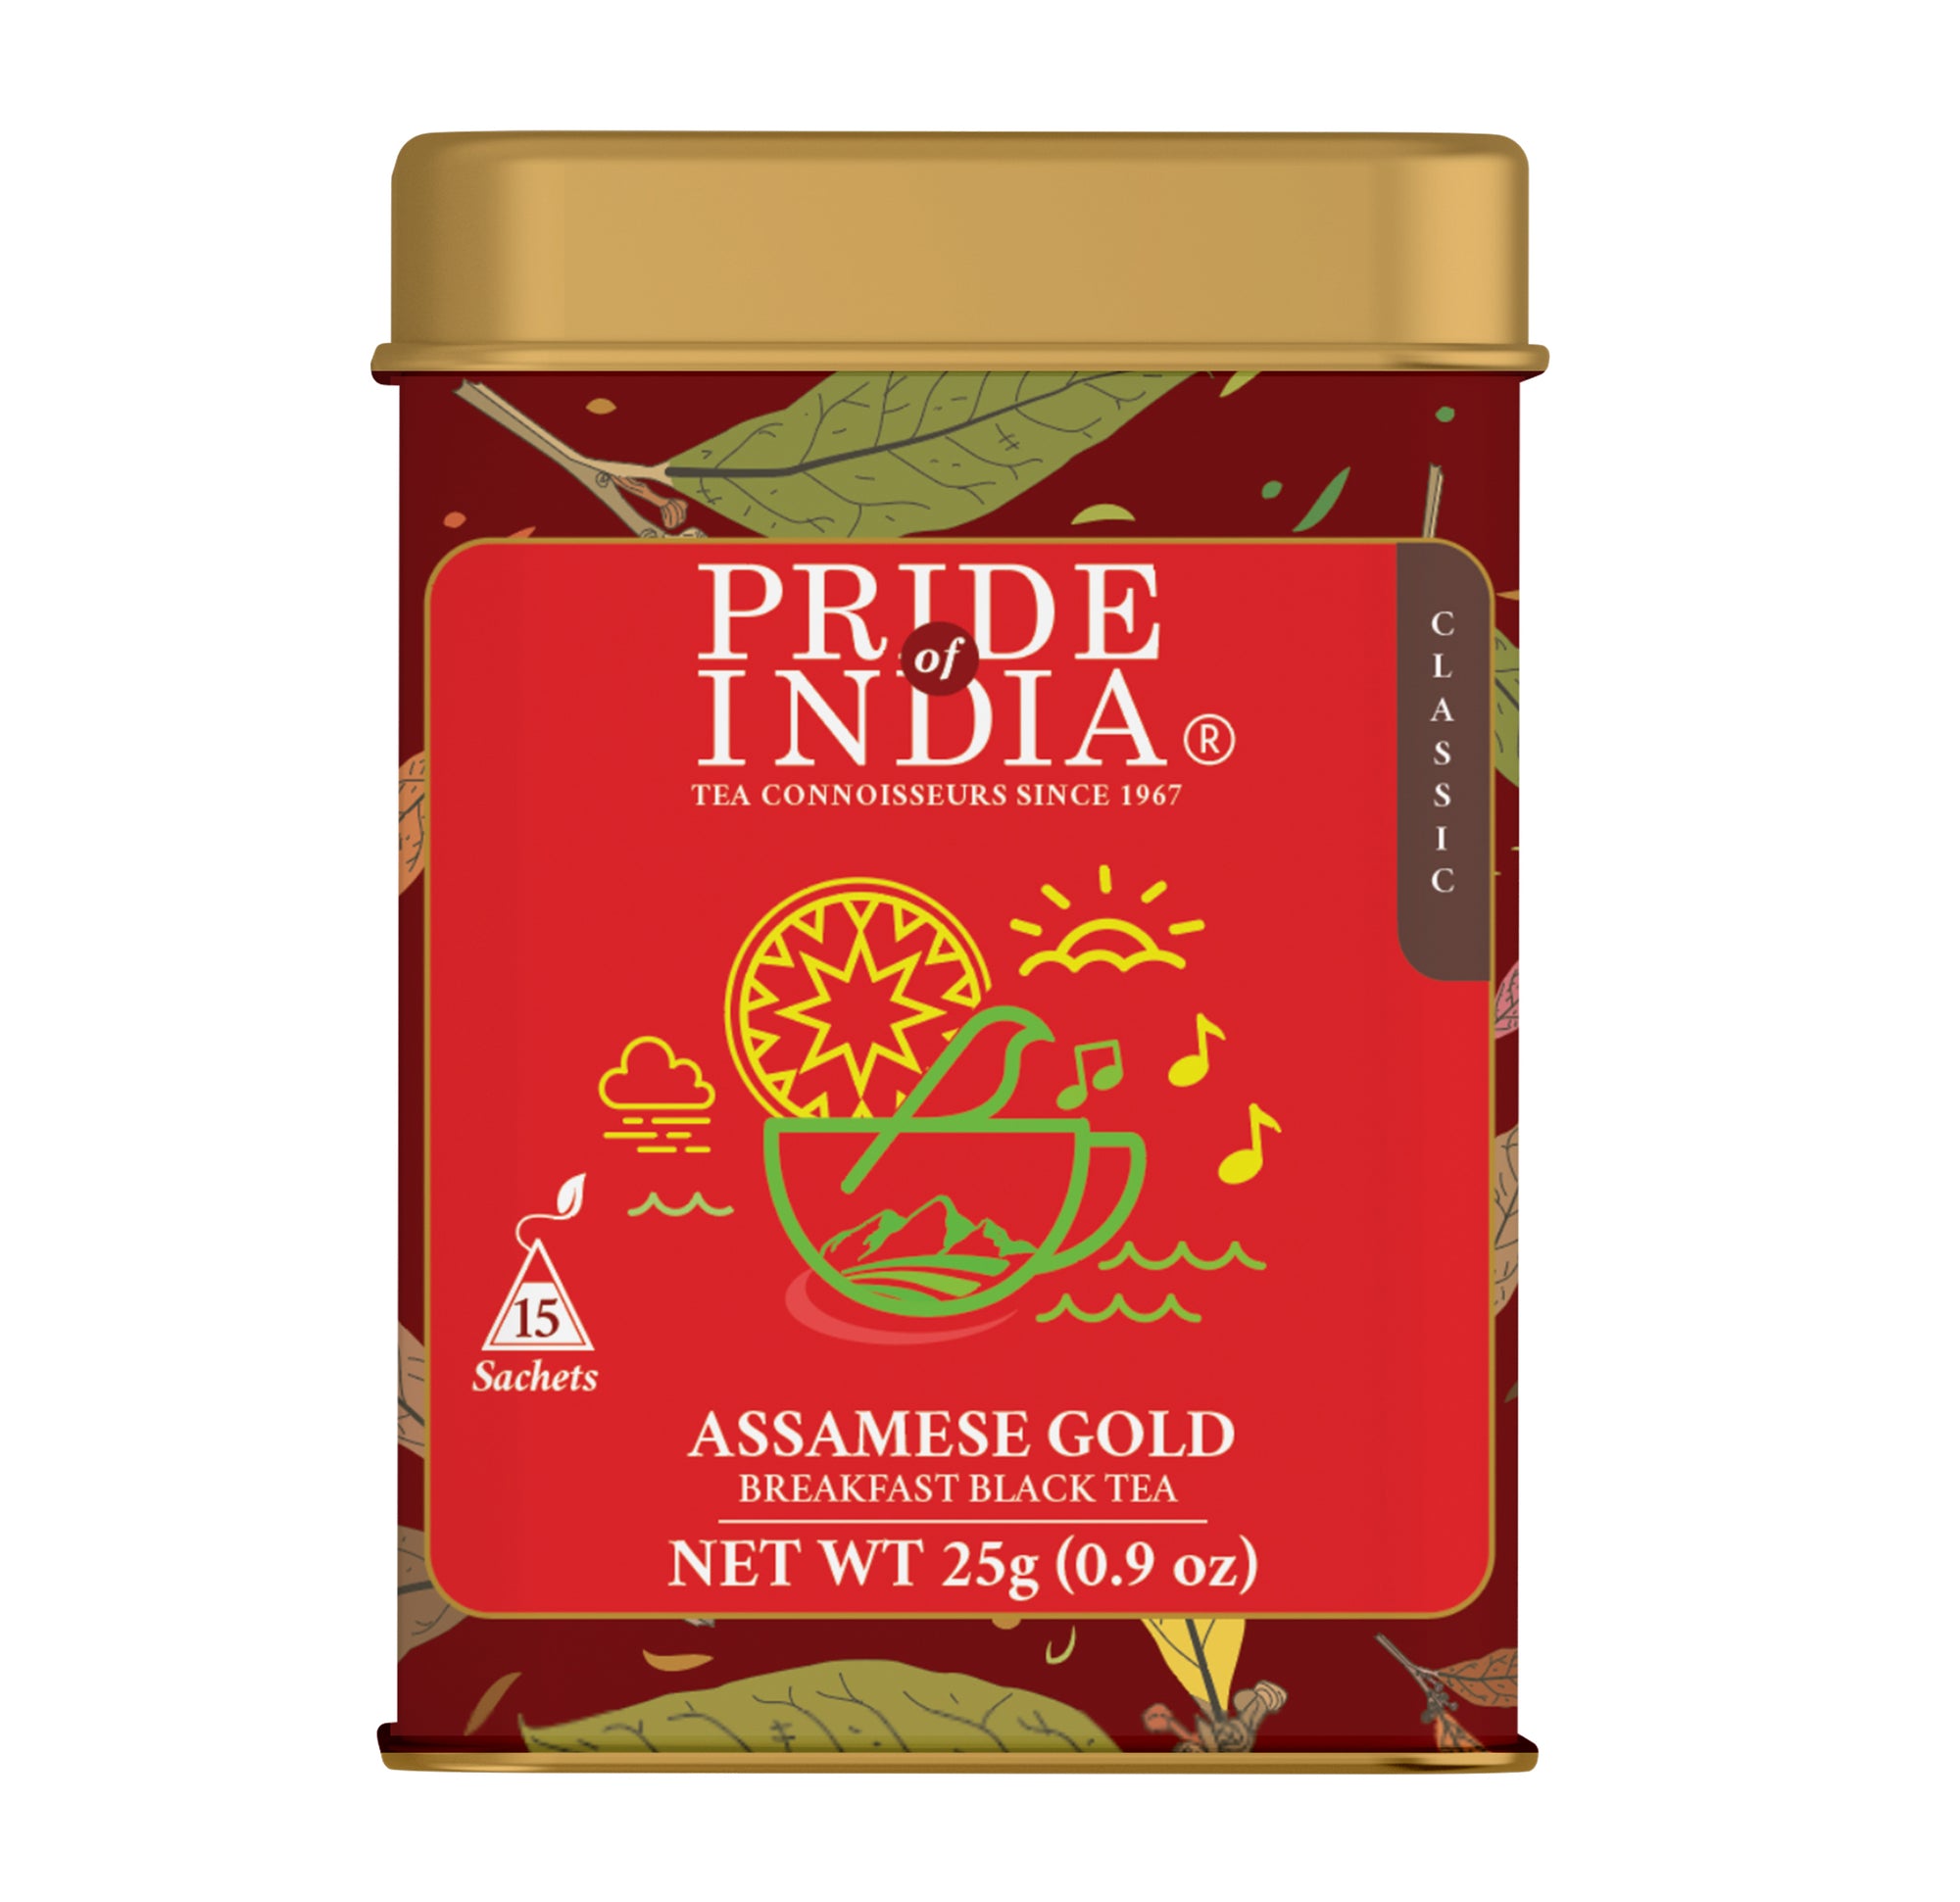 Assamese Gold - Breakfast Black Tea Bags - Pride Of India